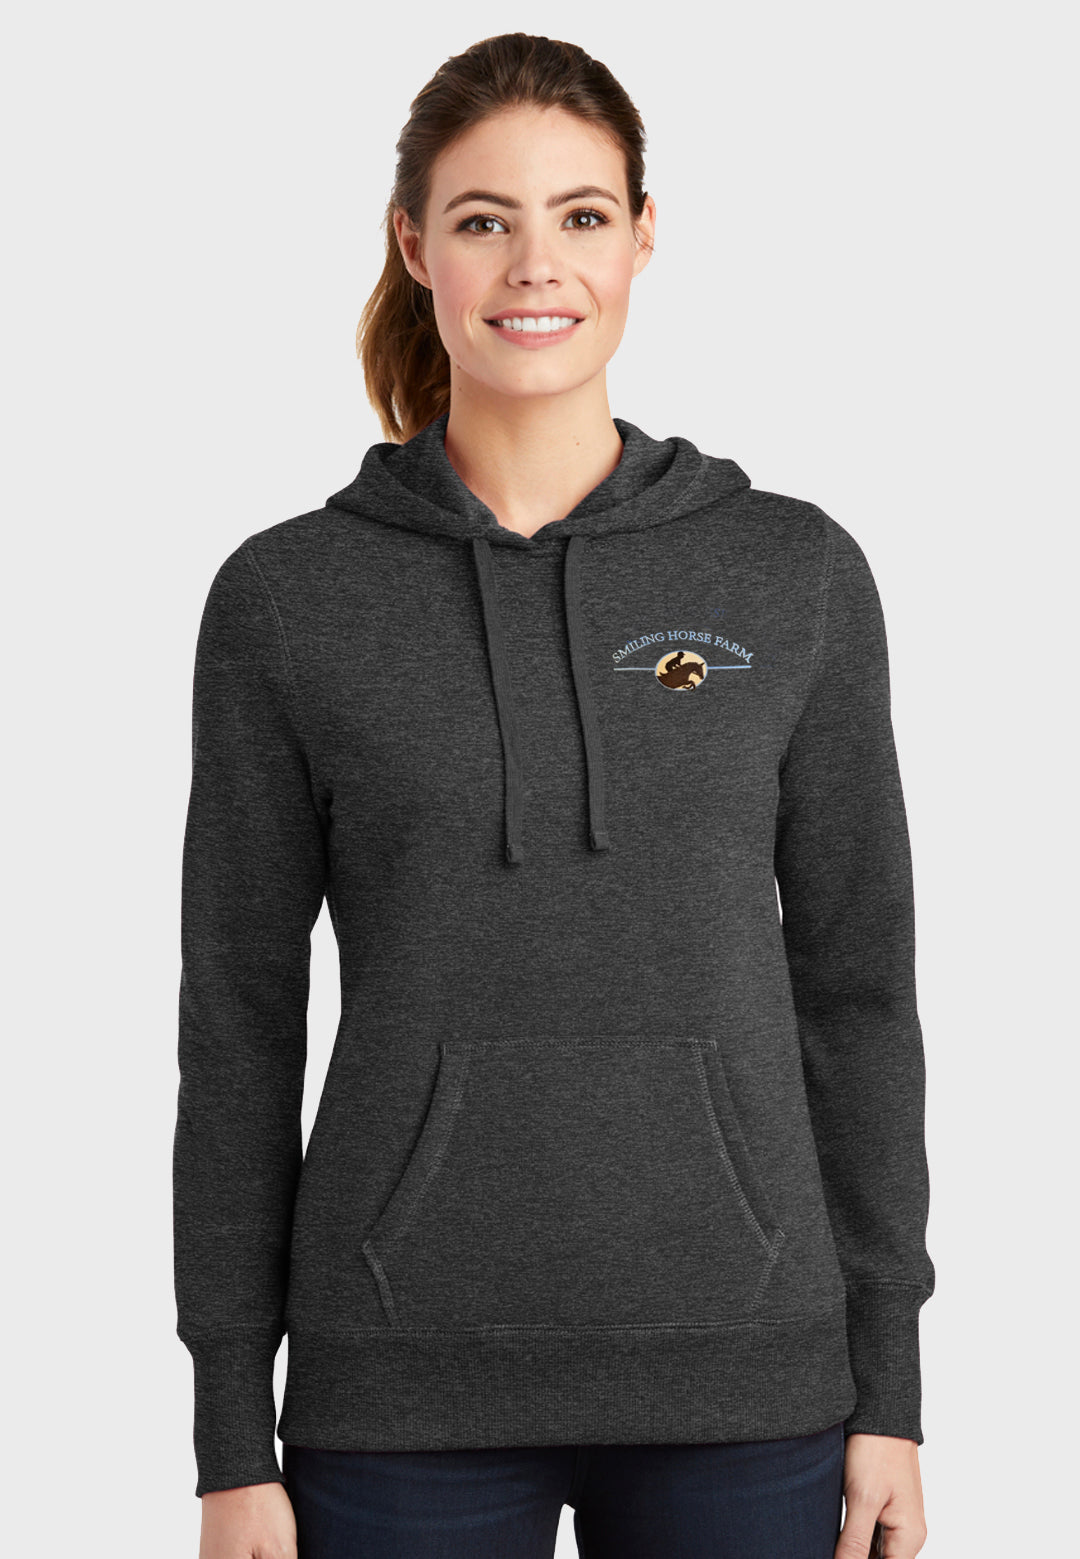 Smiling Horse Farm Sport-Tek® Hooded Sweatshirt - Adult + Youth sizes